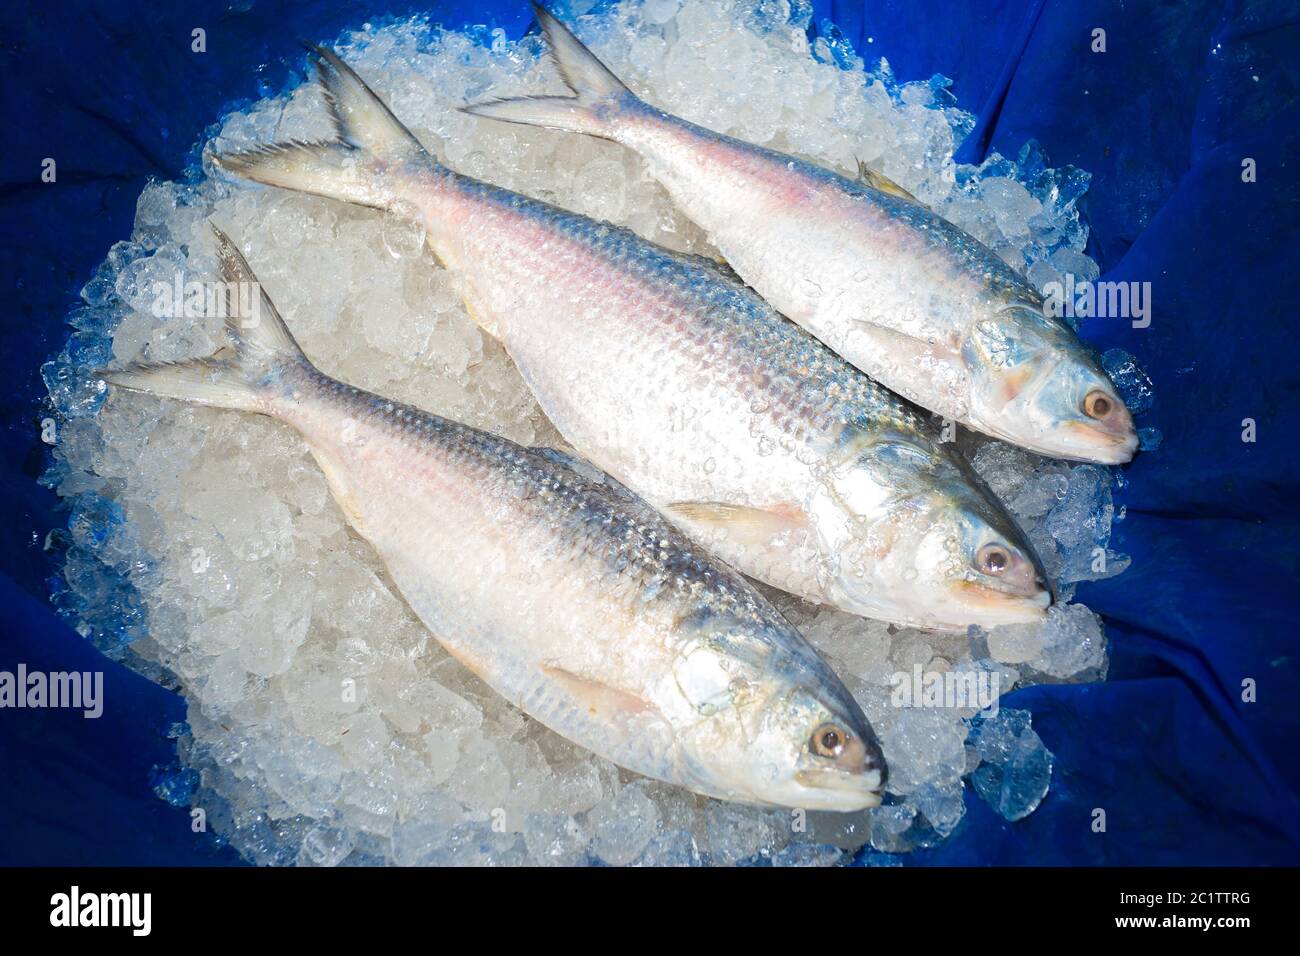 3 pis Hilsa Fish. Stock Photo